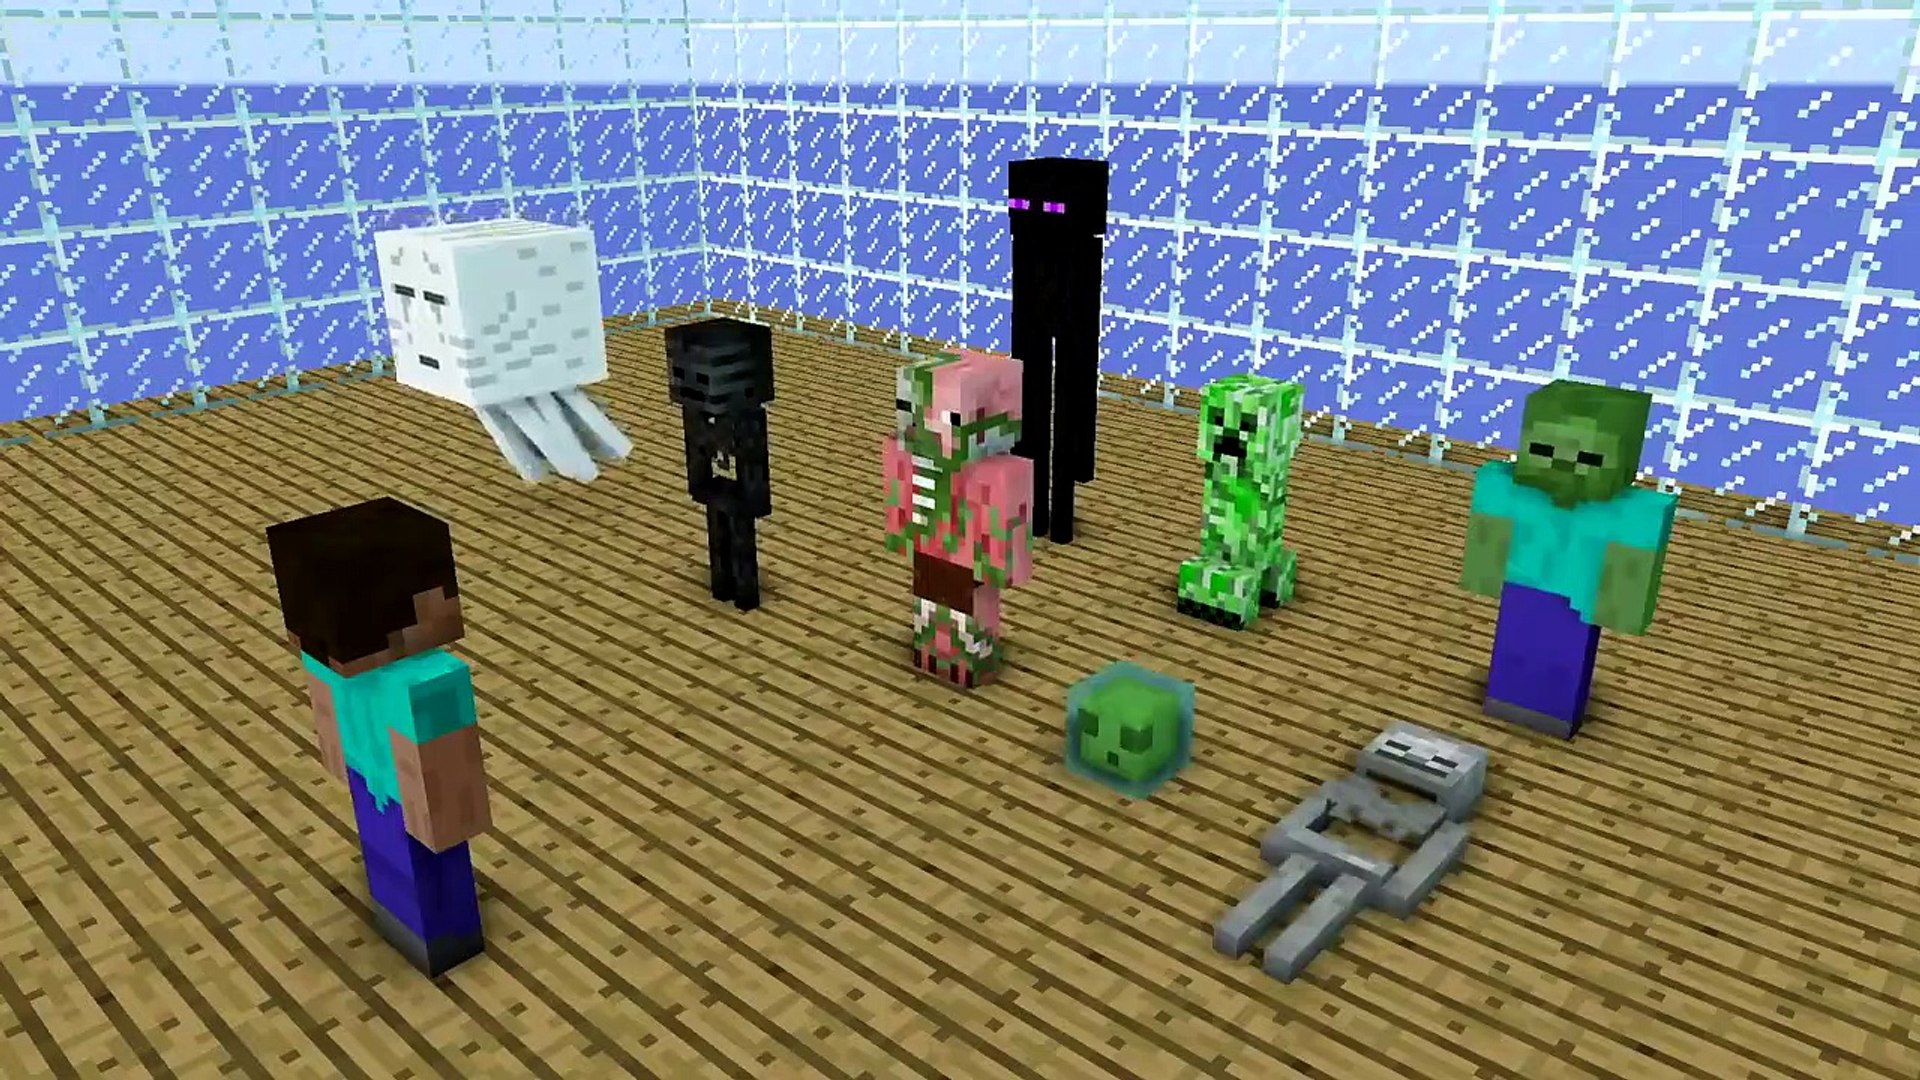 Monster School : SCARY SLENDRINA VS TEMPLE RUN CHALLENGE - Minecraft  Animation - Dailymotion Video